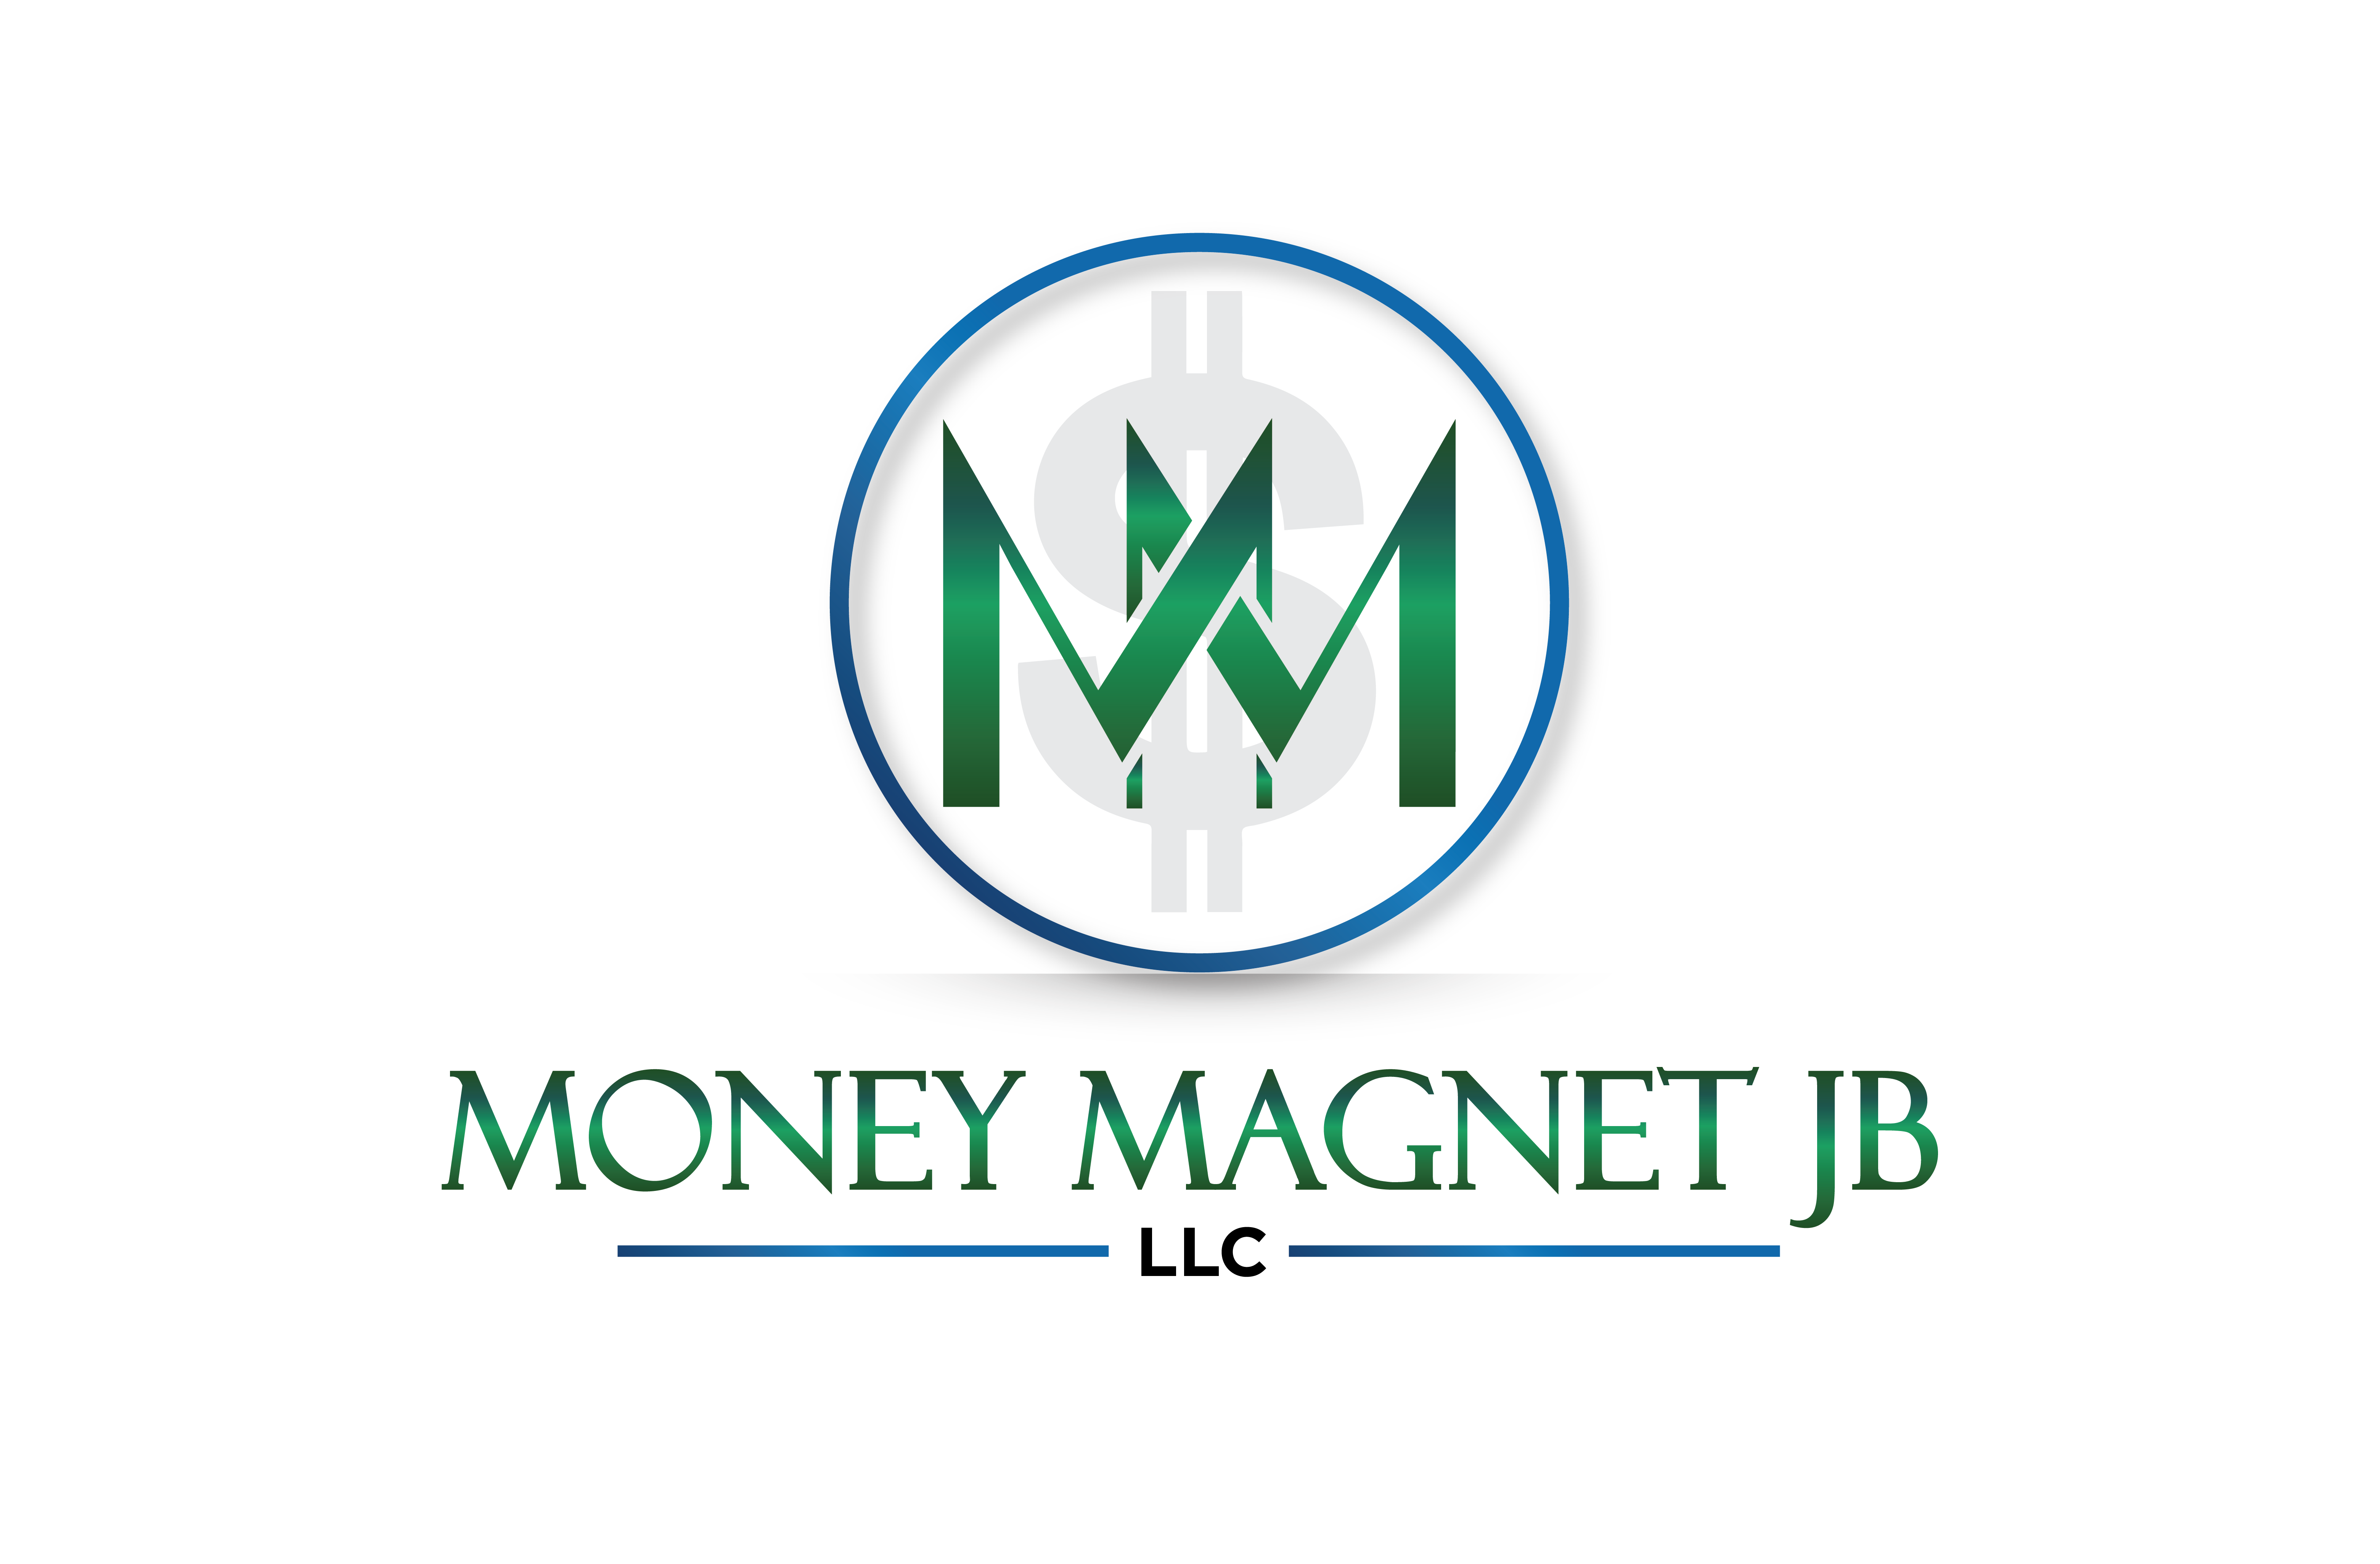 Money Magnet JB LLC